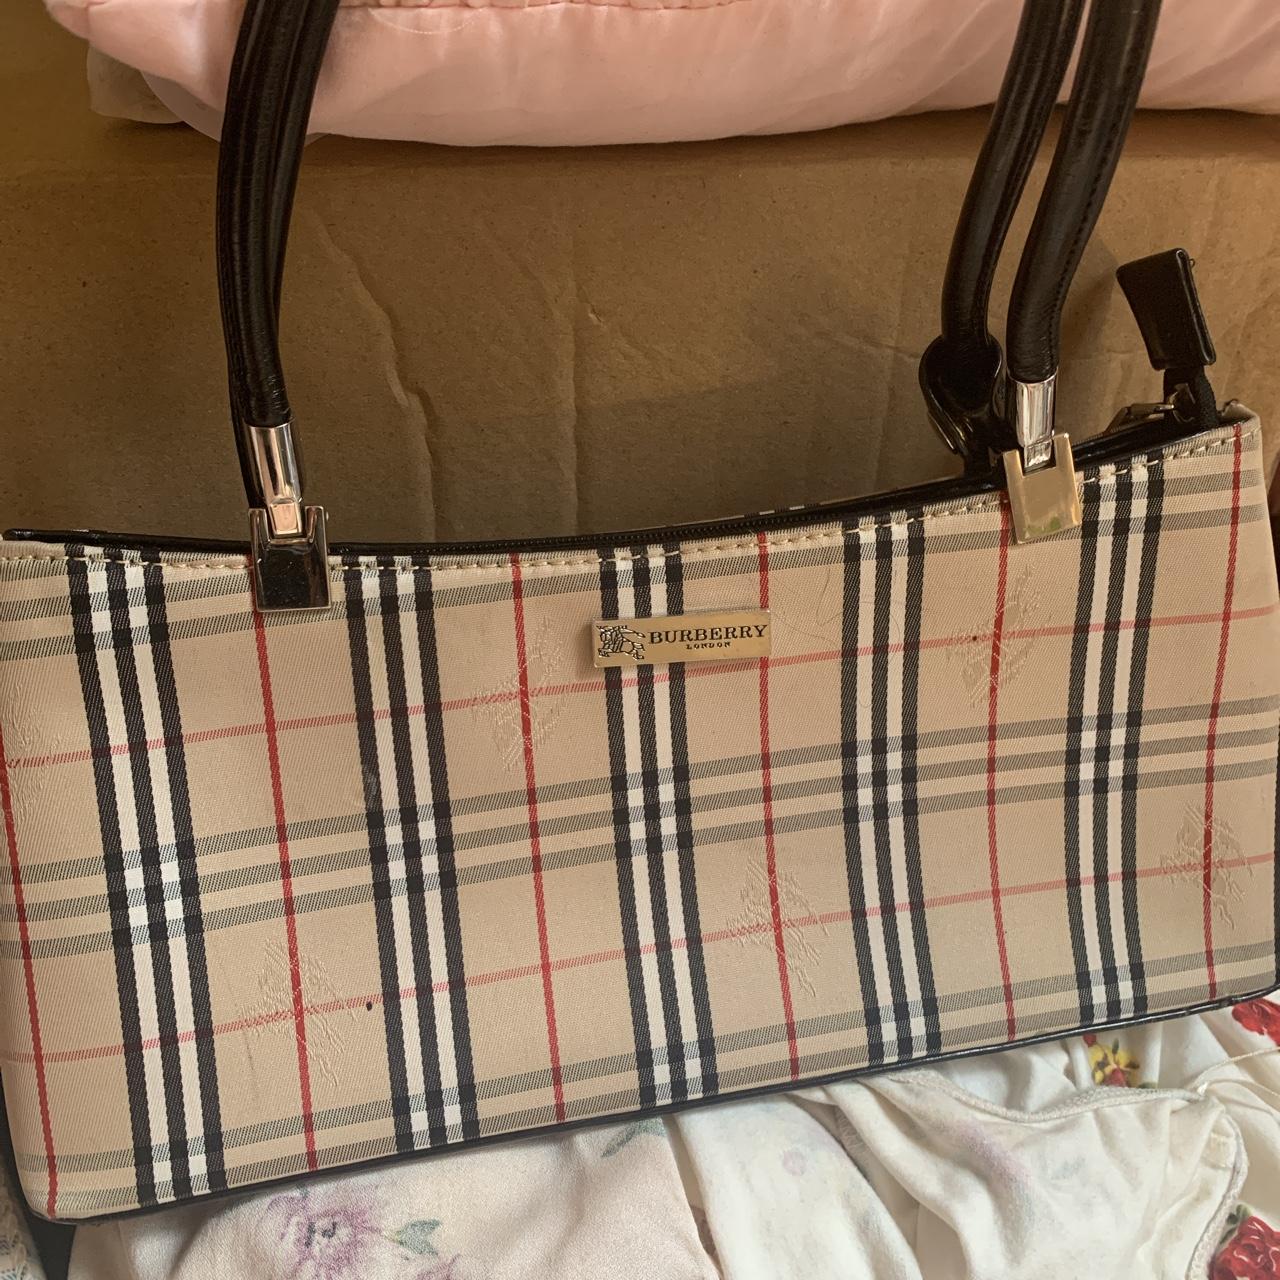 Burberry London Bags & Handbags for Women - prices in dubai | FASHIOLA UAE